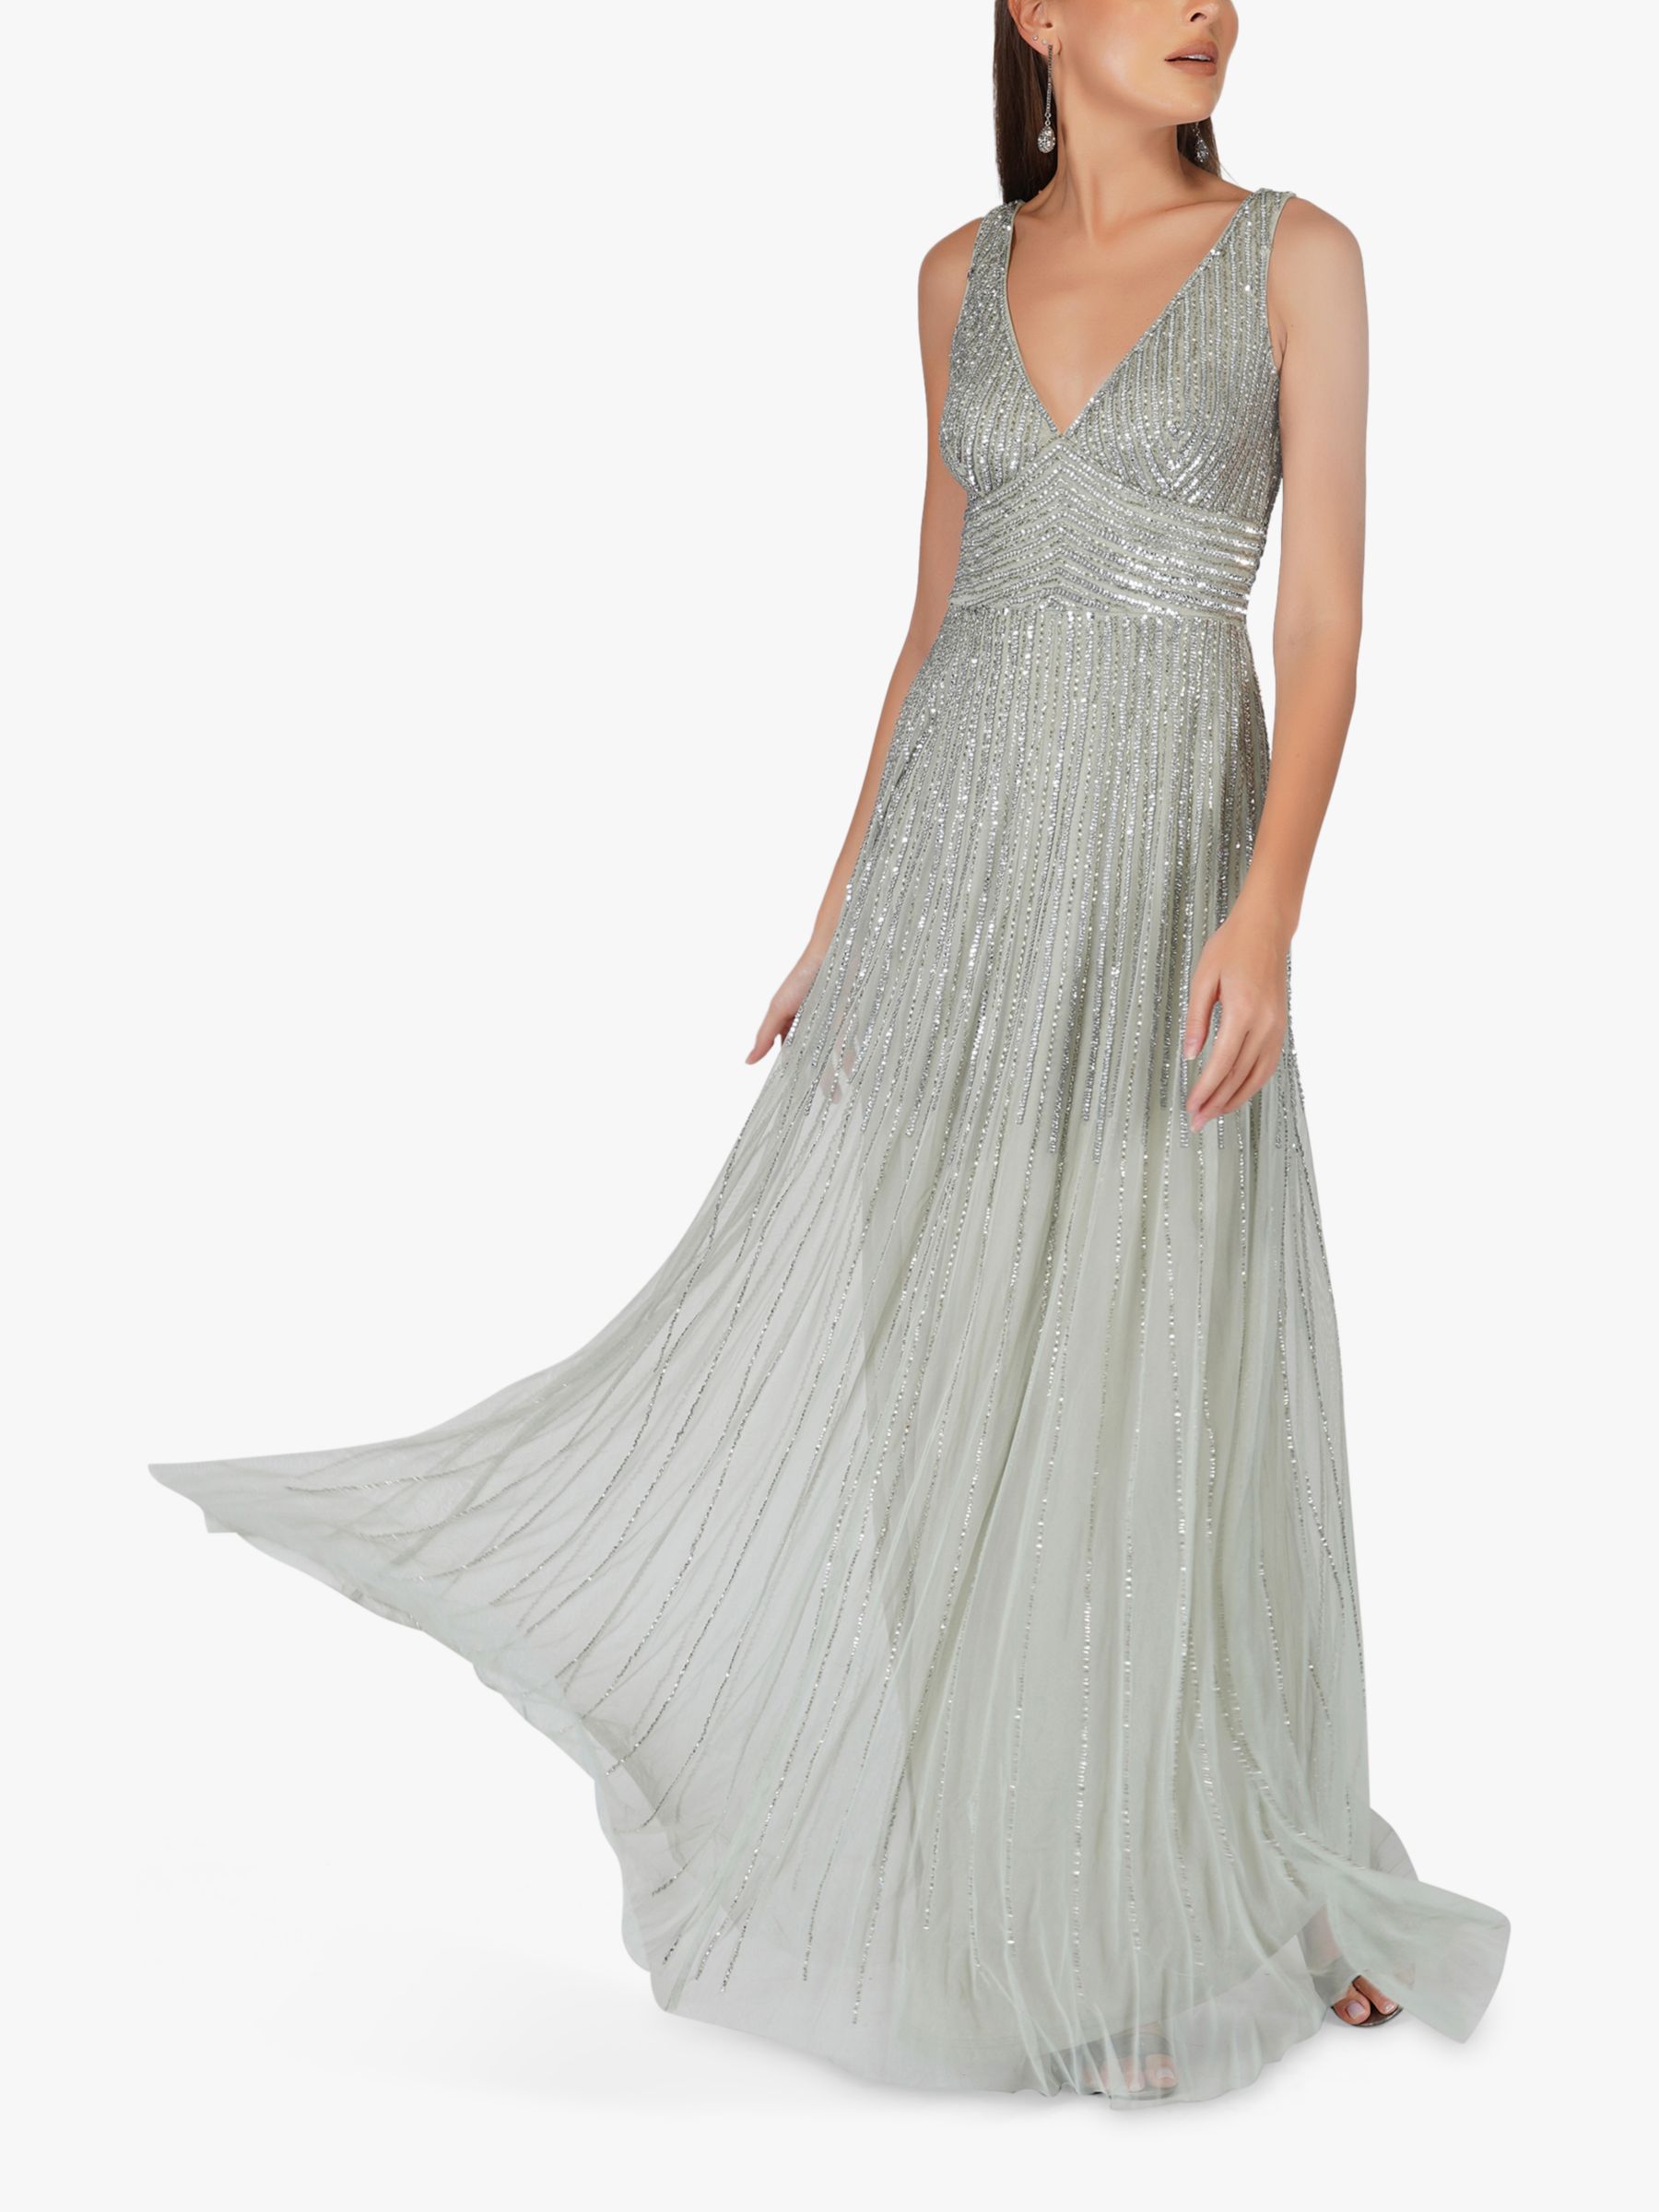 Lace & Beads Lorelai Embellished Maxi Dress, Sage Grey, 6